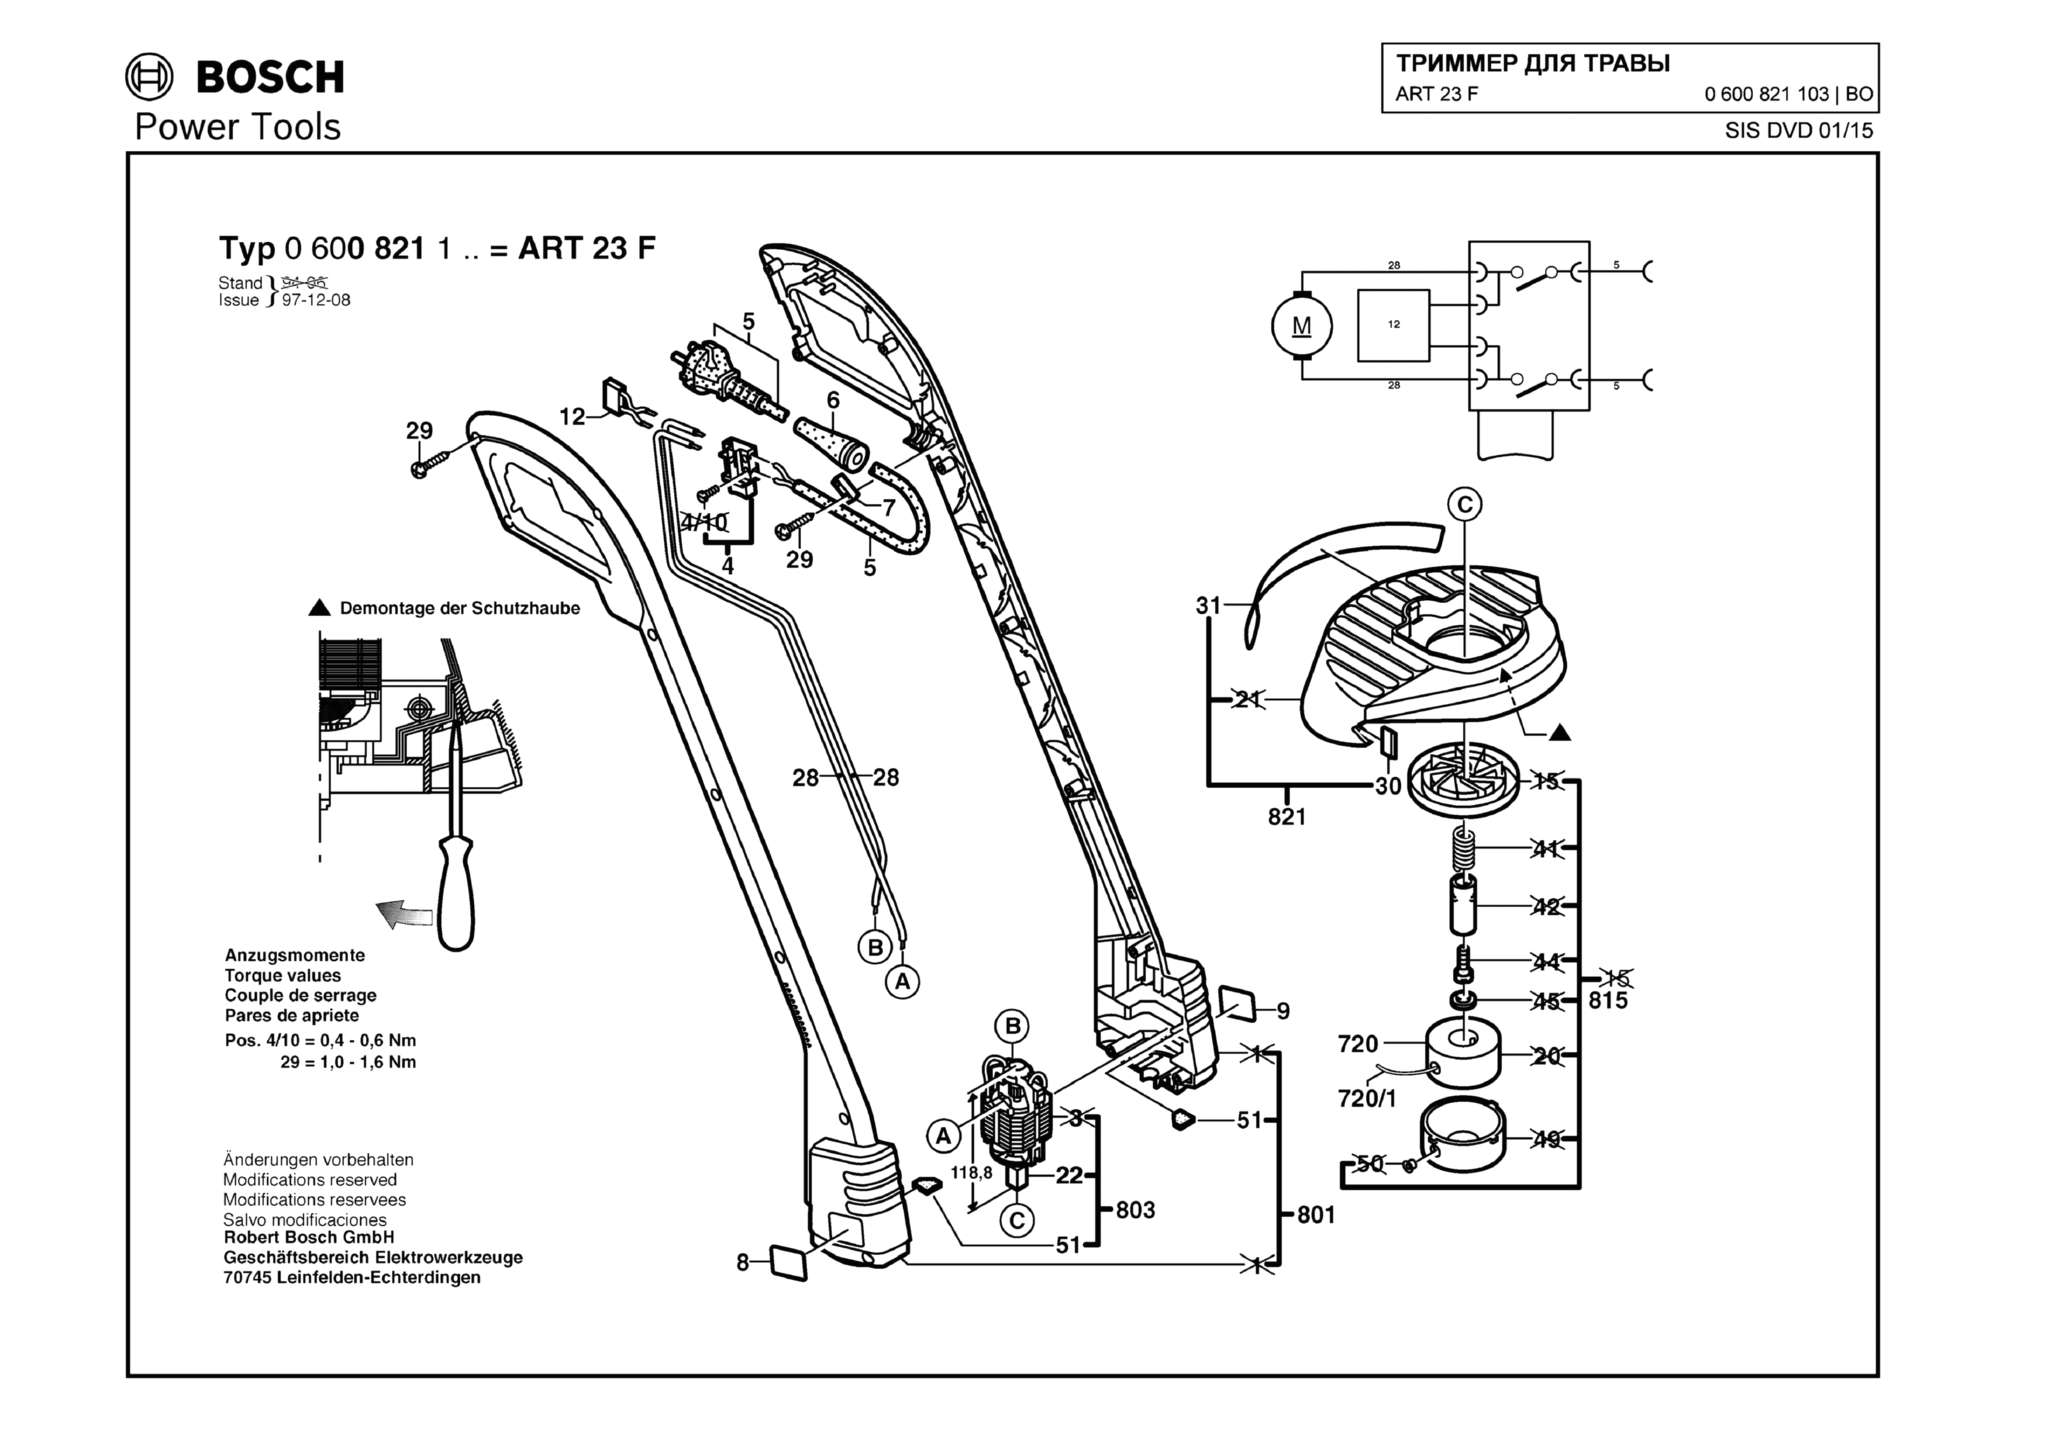 Запчасти, схема и деталировка Bosch ART 23 F (ТИП 0600821103)